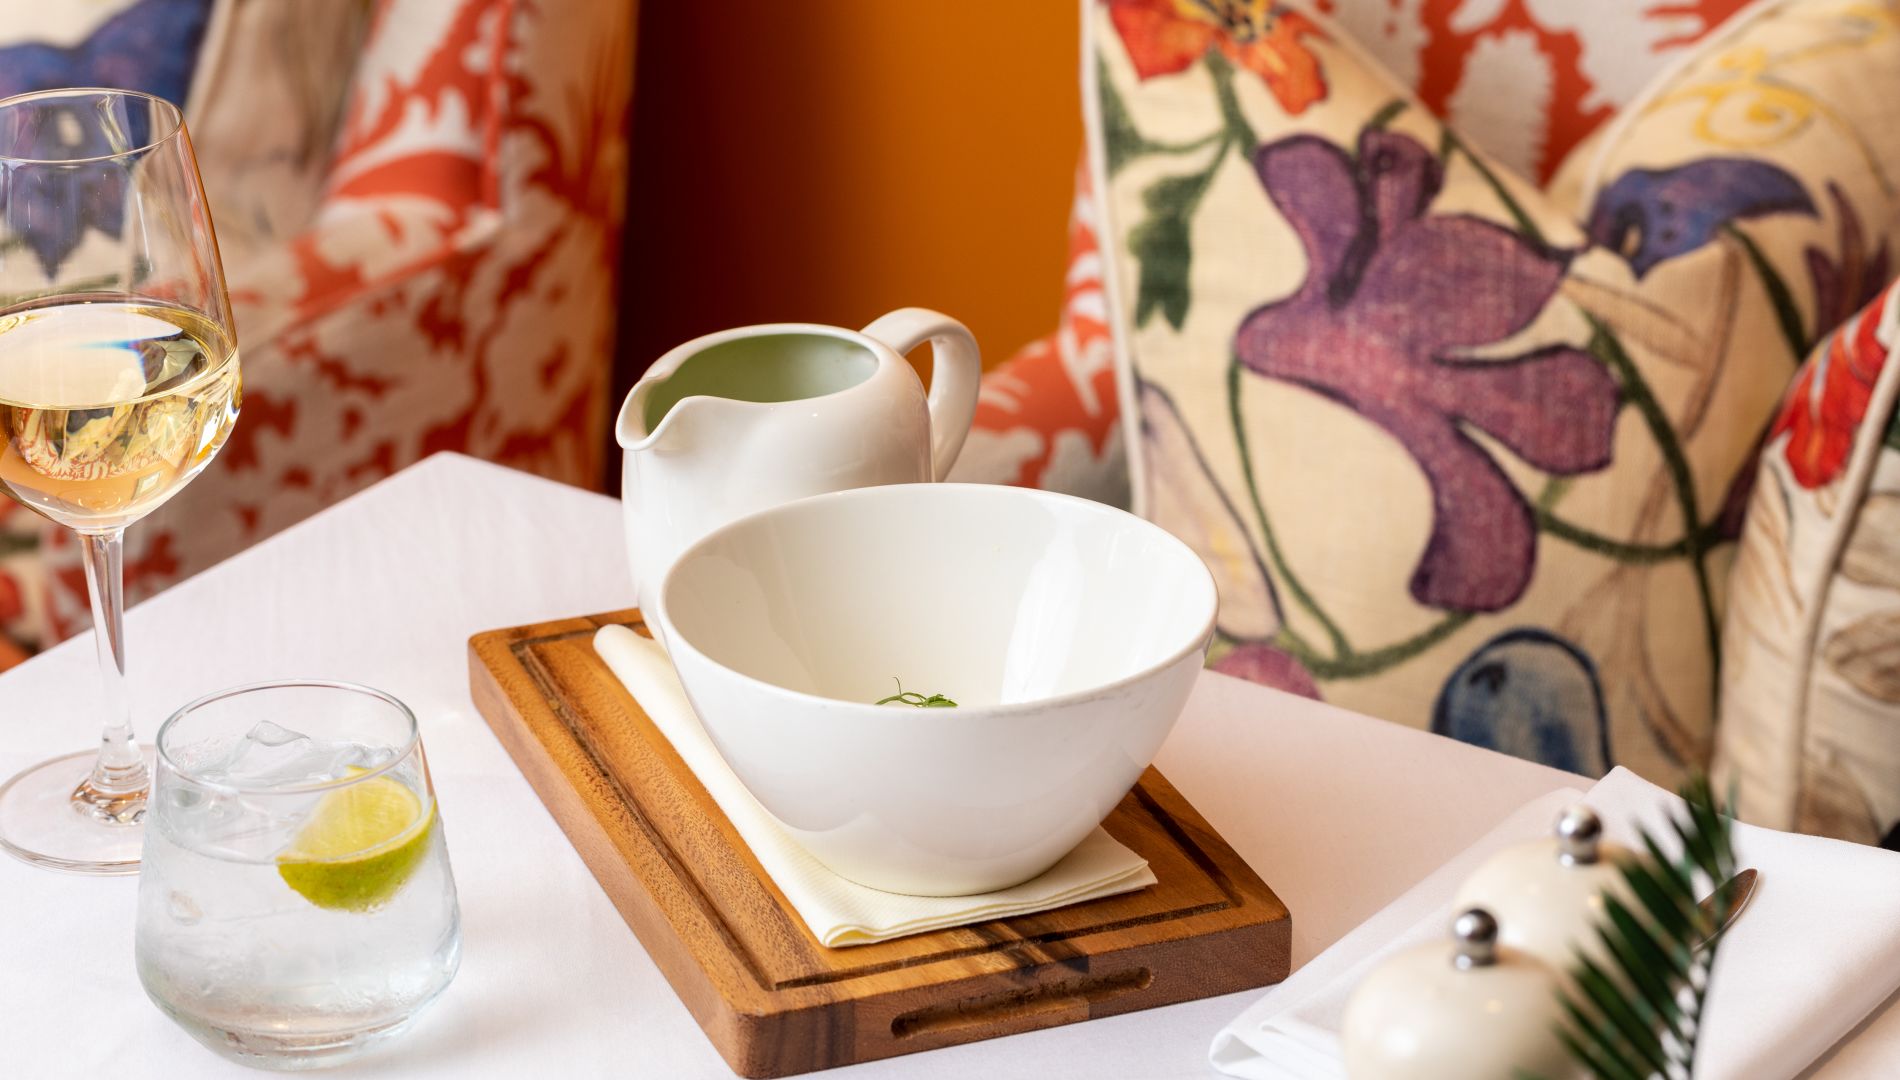 A Tea Set With A Teacup And A Glass Of Wine